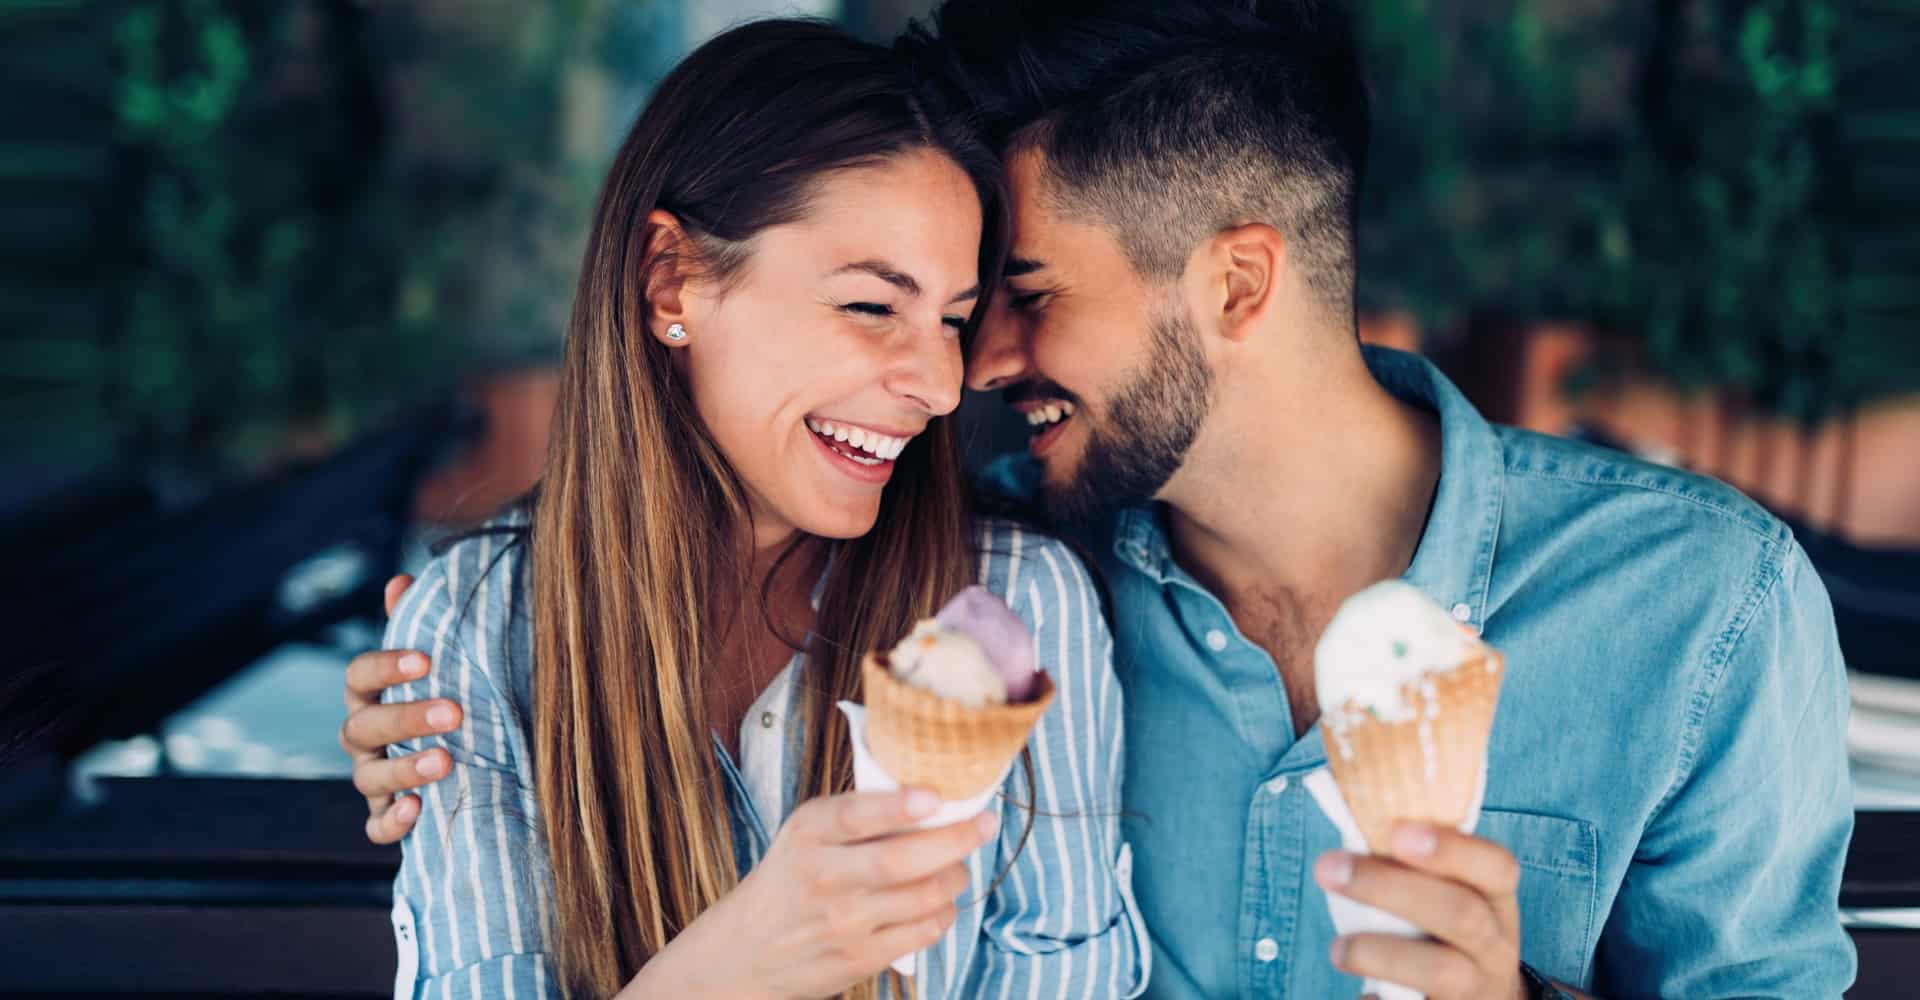 Couple enjoying ice cream